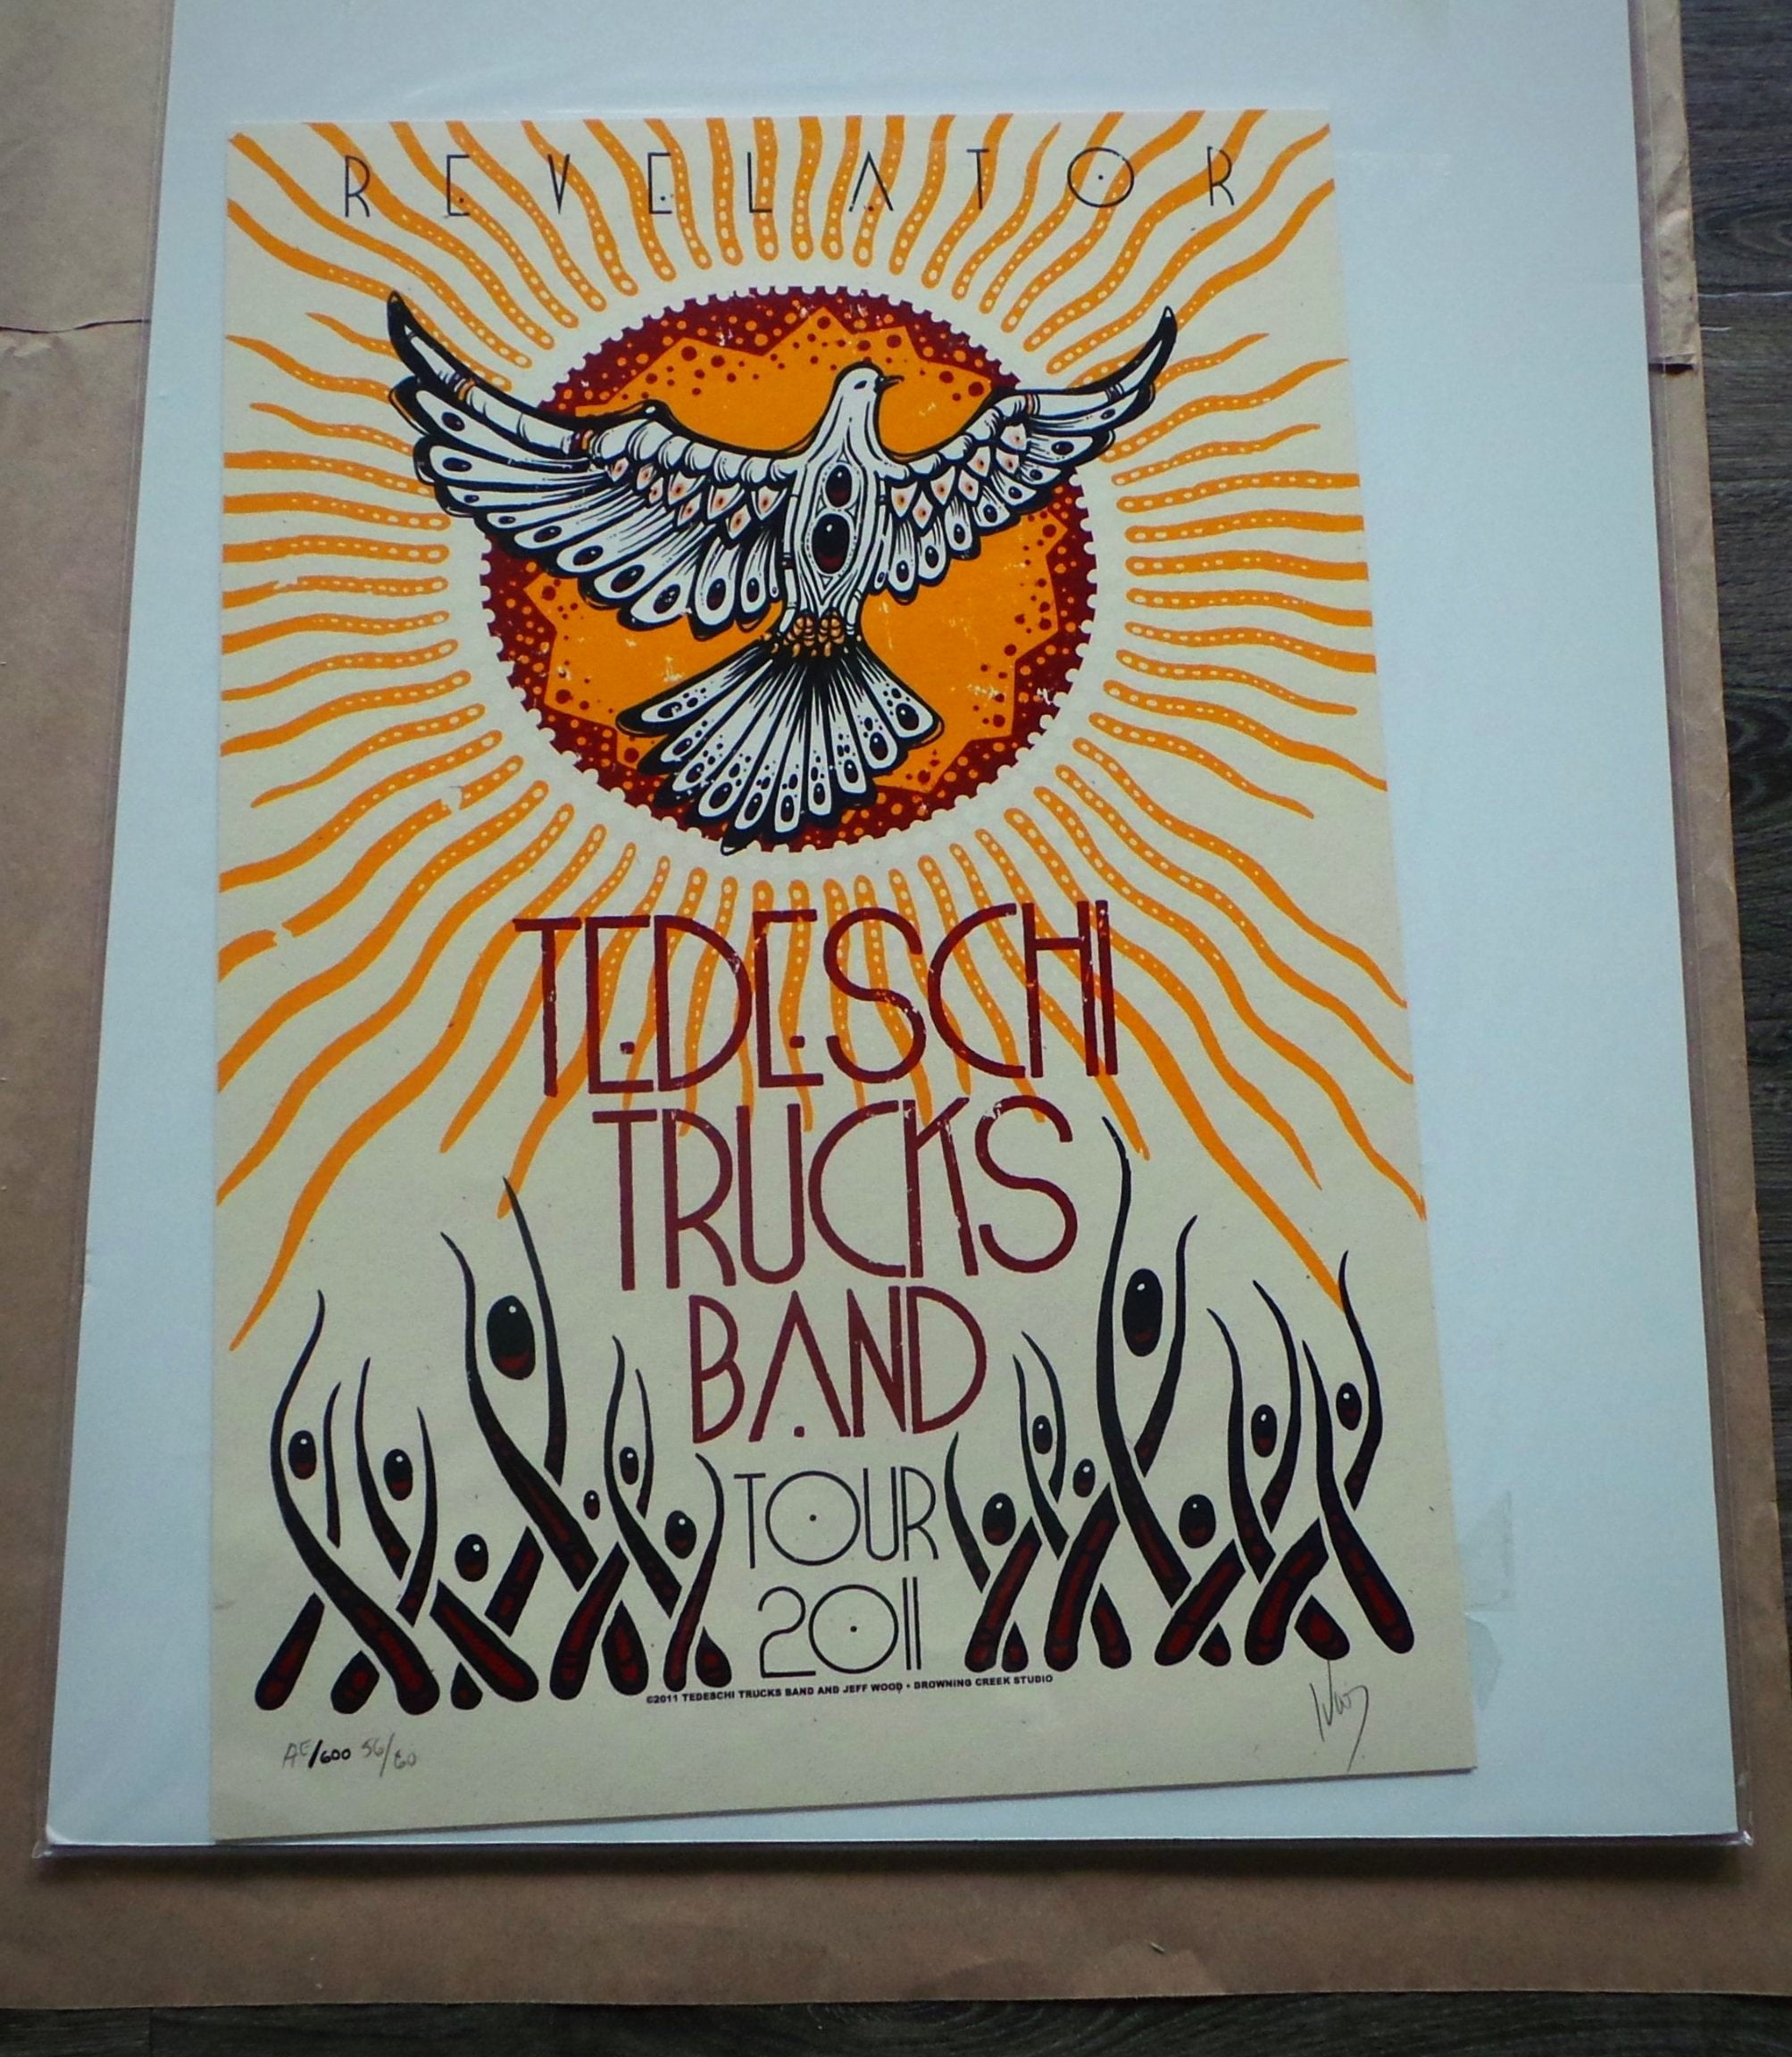 2011 Tedeschi Trucks Band Revelator Tour Poster by Jeff Wood, S/N'd